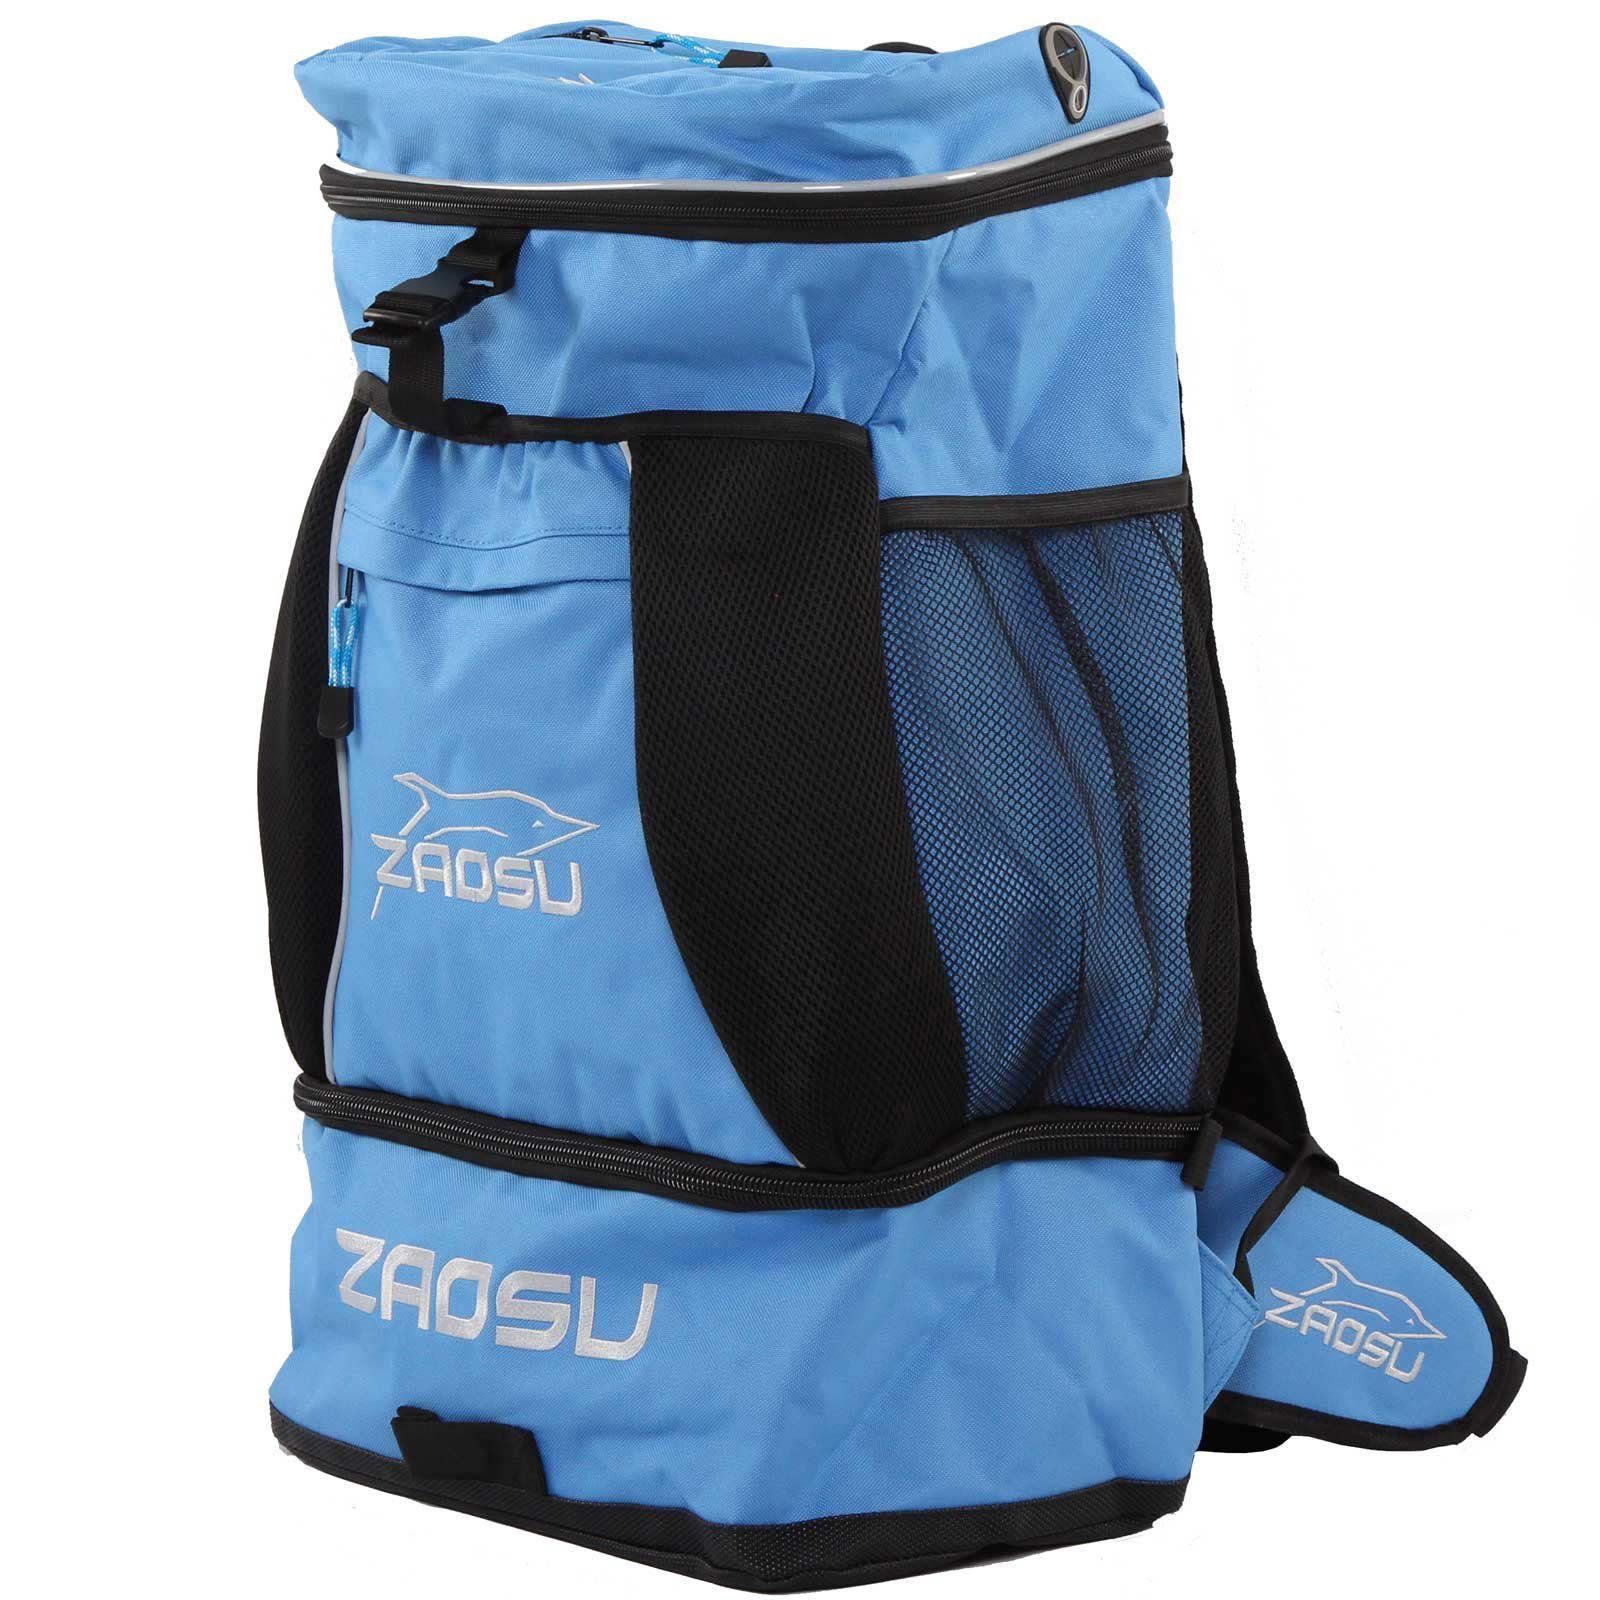 ZAOSU Sportrucksack Transition Bag neonblau